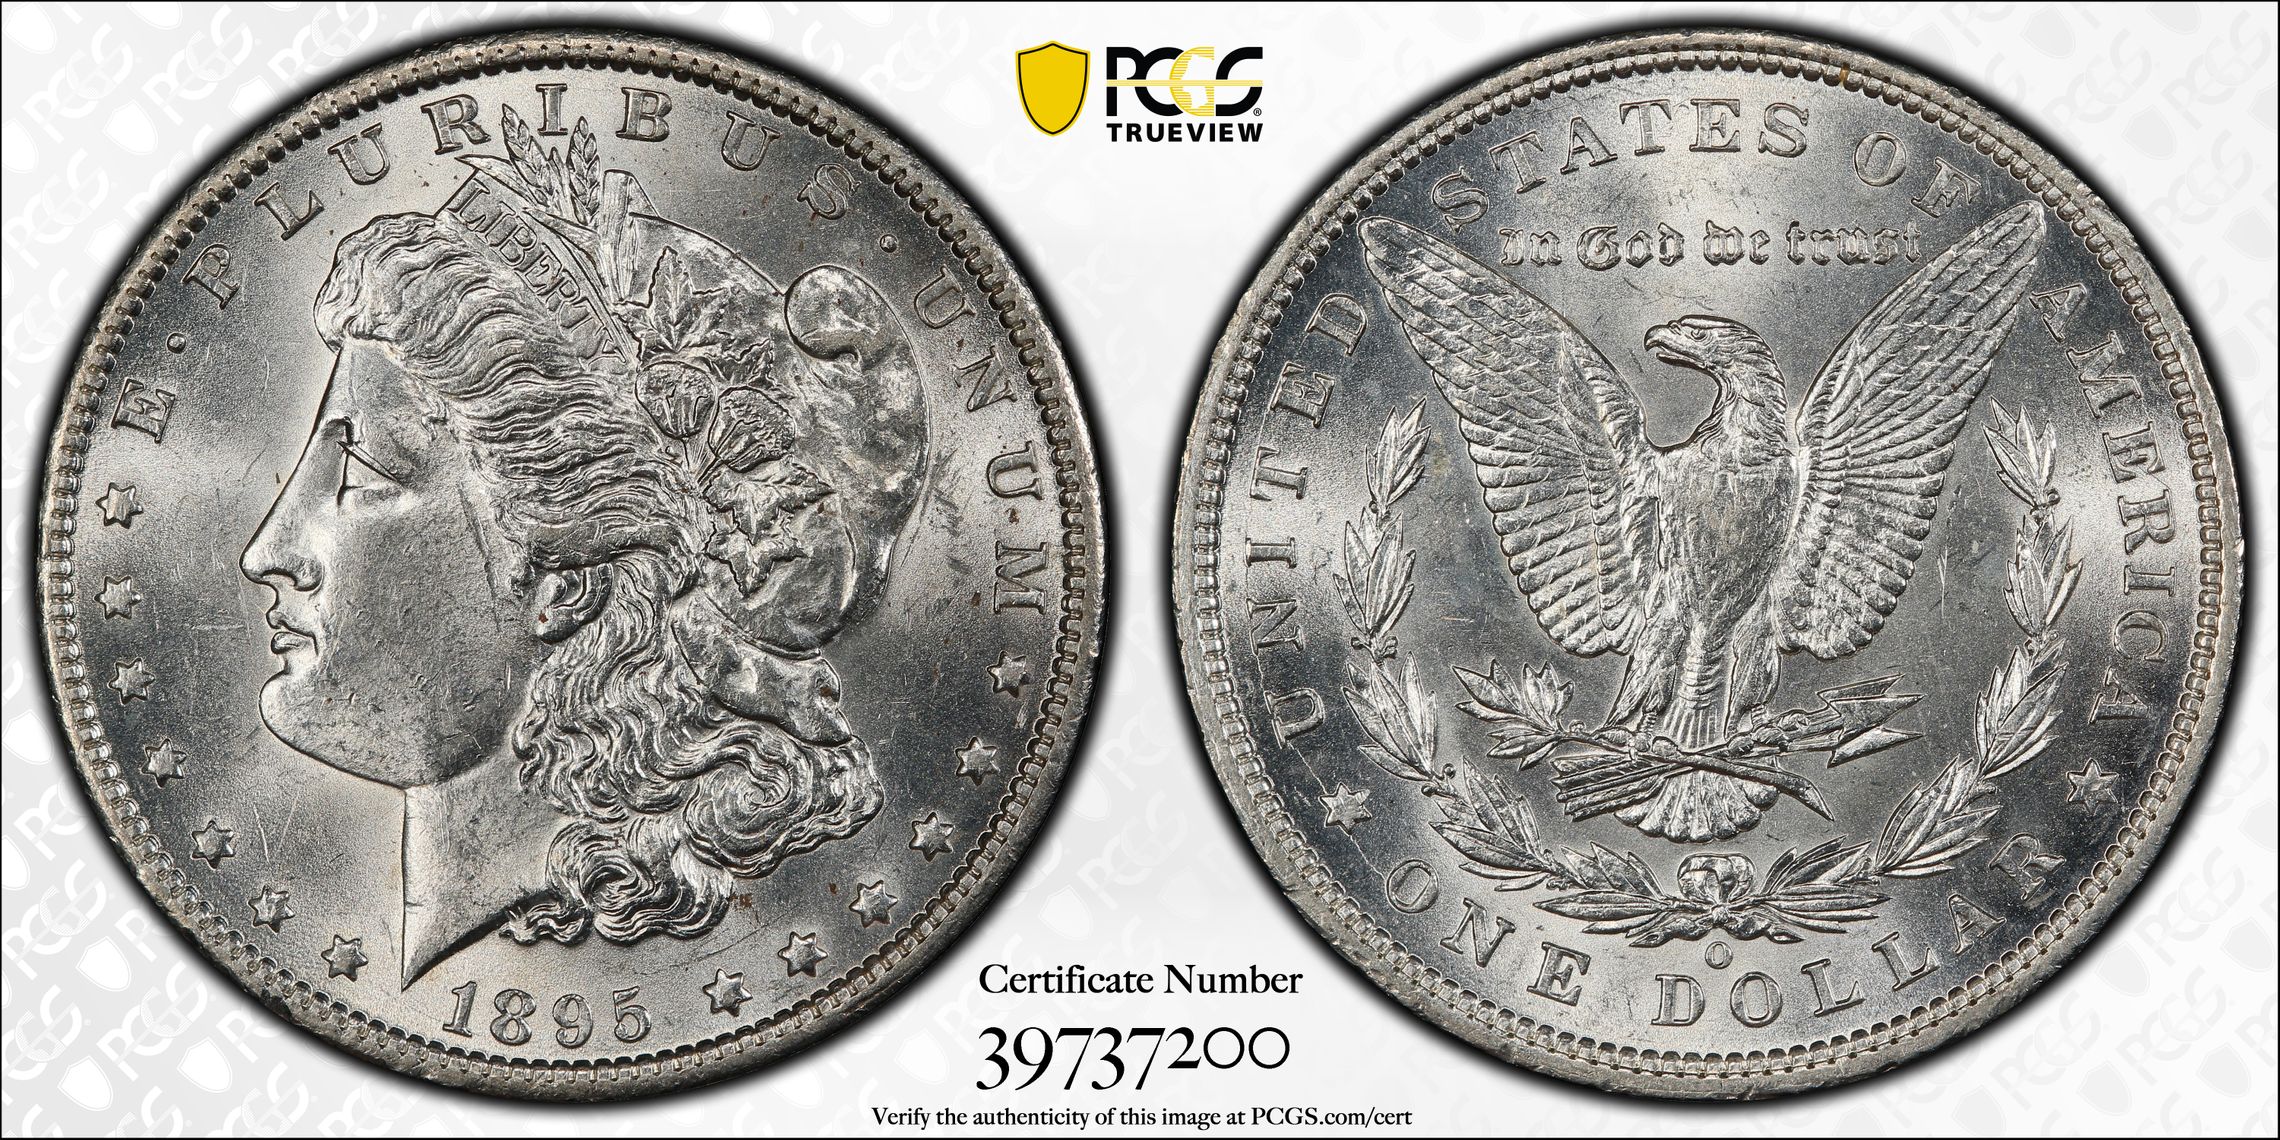 CHOICE-GEM BU  ! Morgan Silver $1 PCGS MS64 1880-S